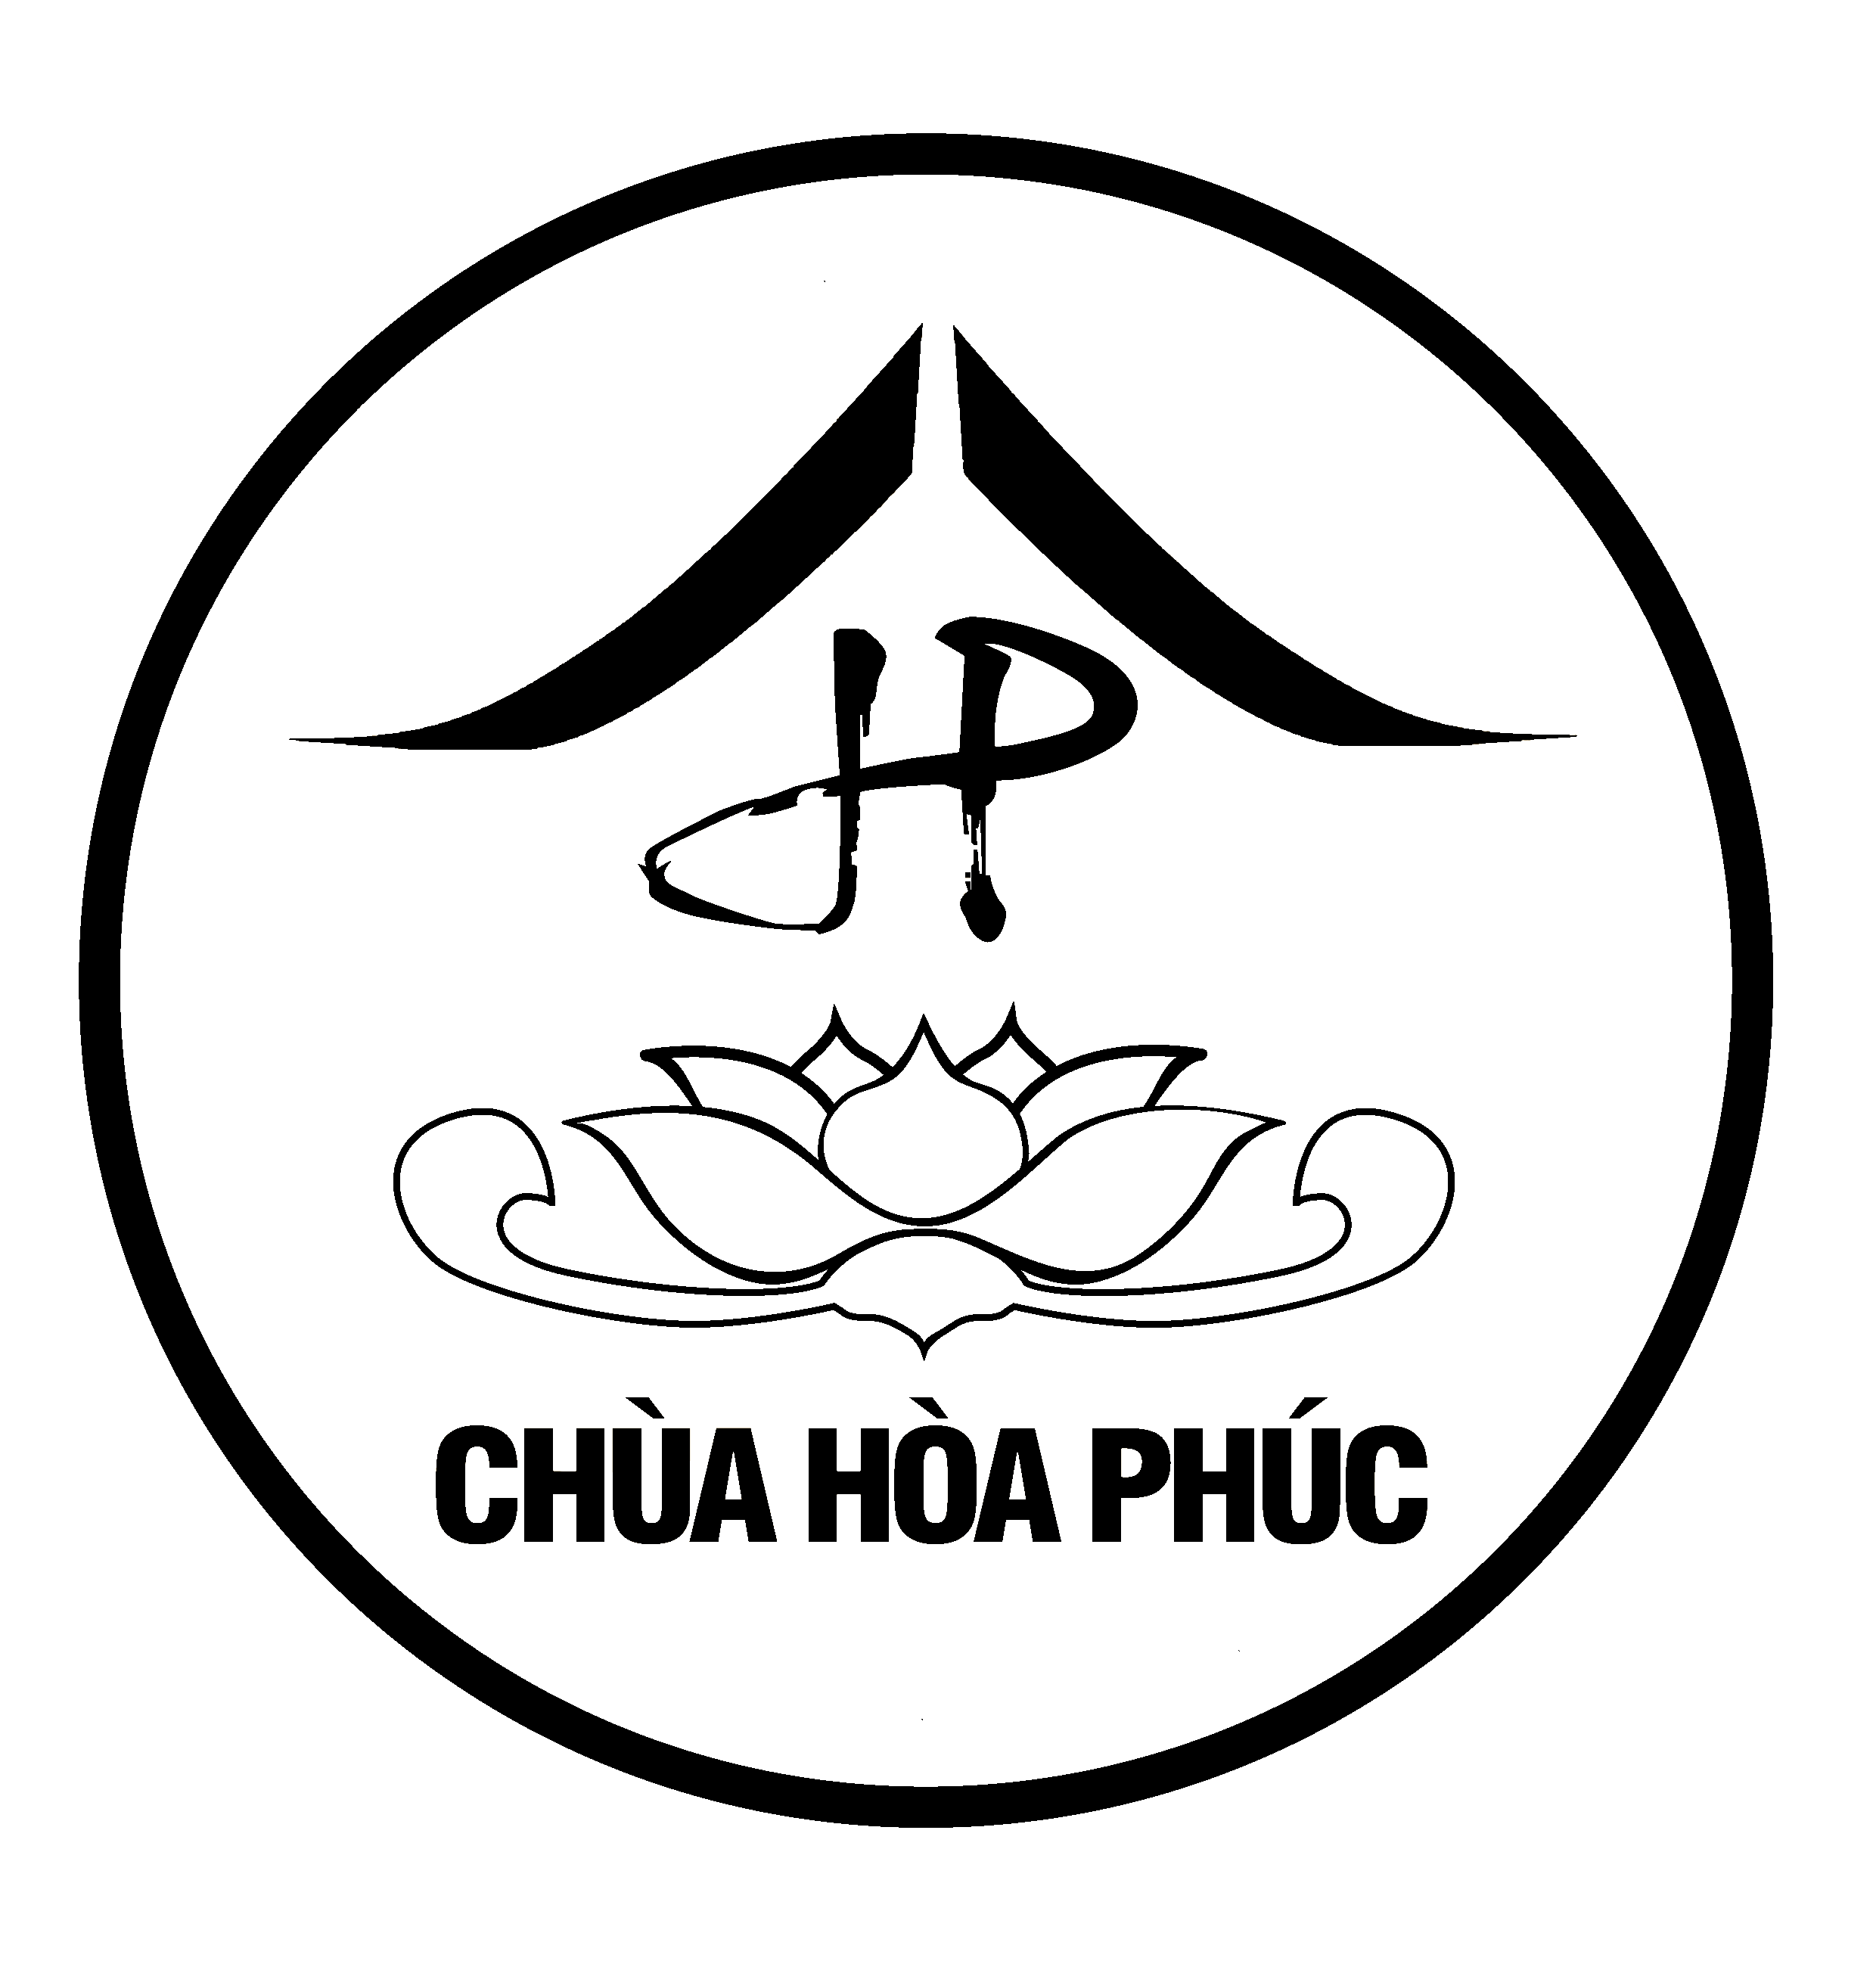 LOGO CHUA HOA PHUC